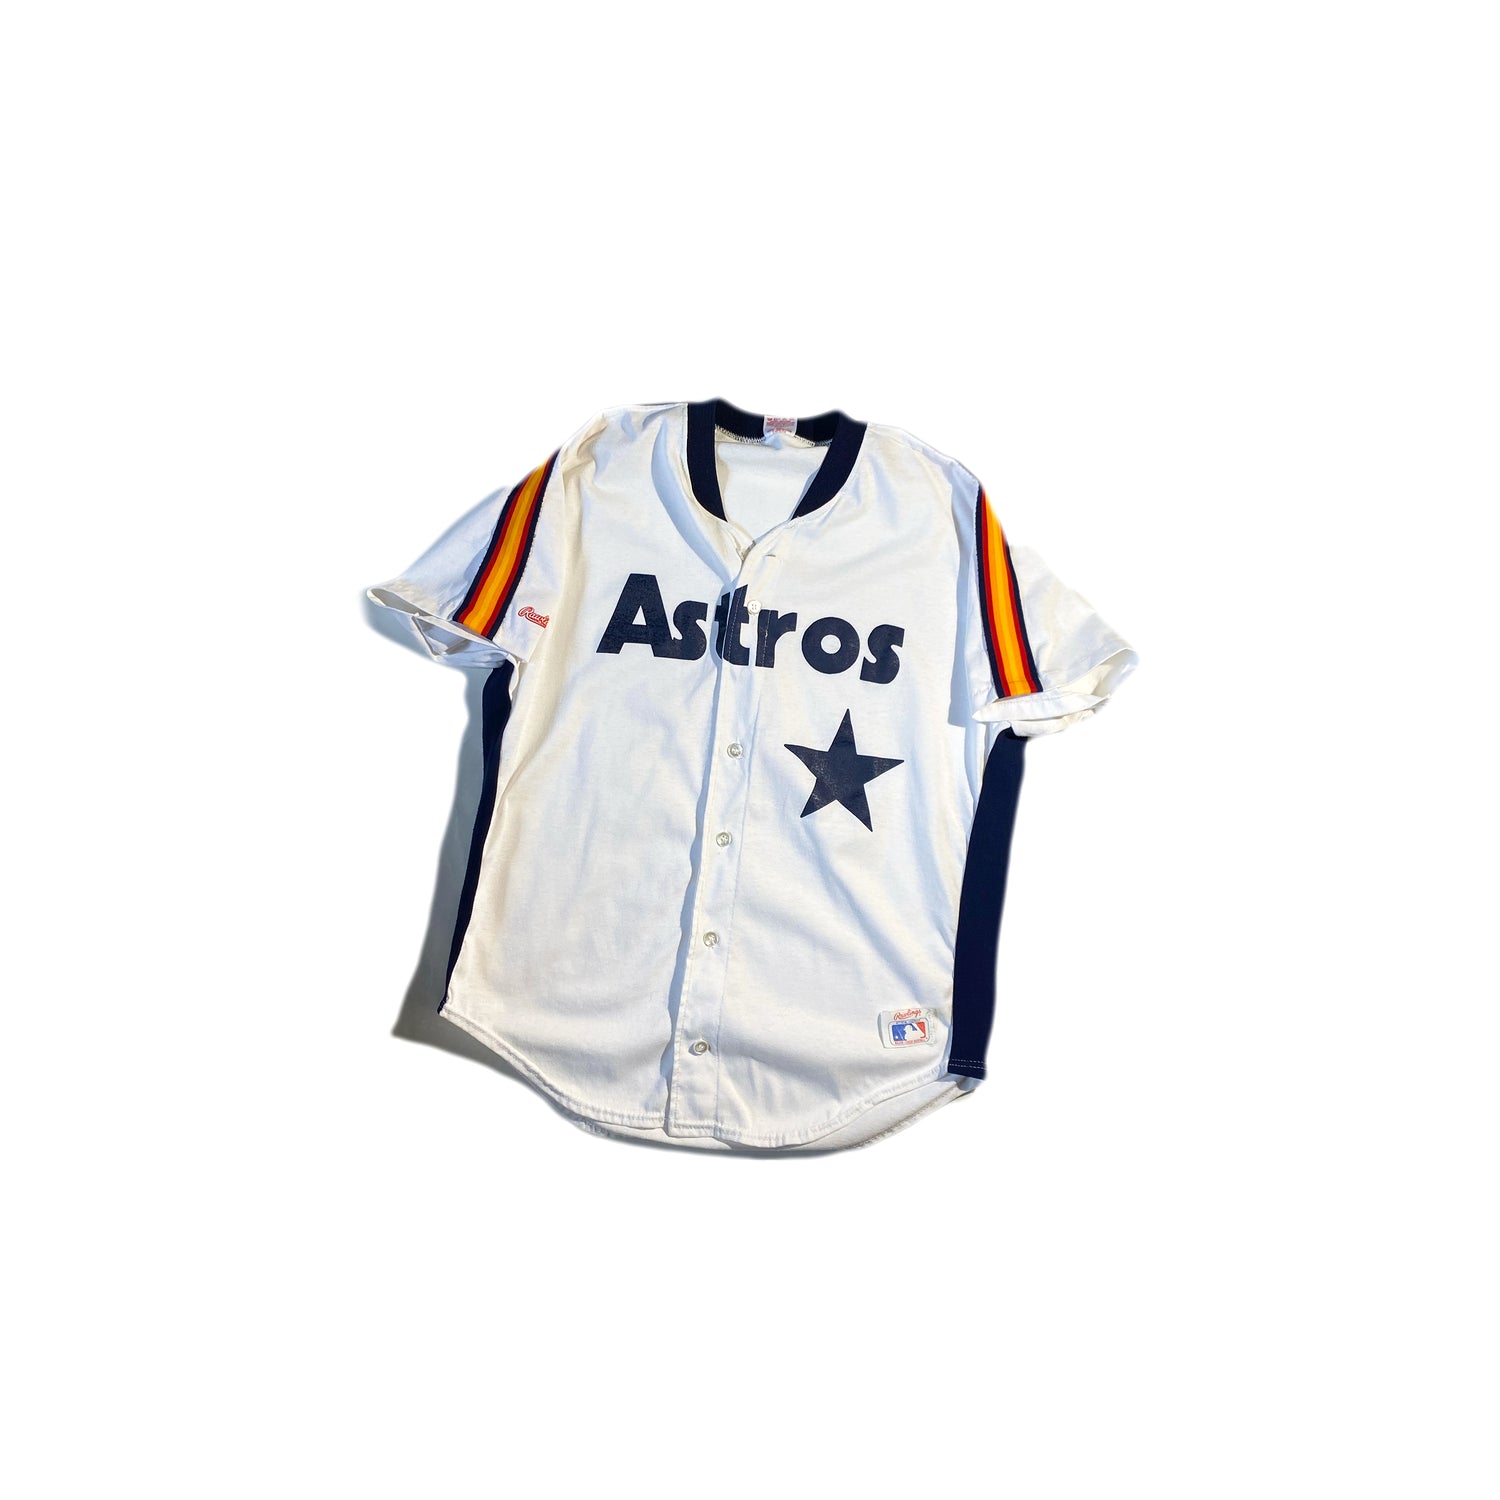 astros jersey 1